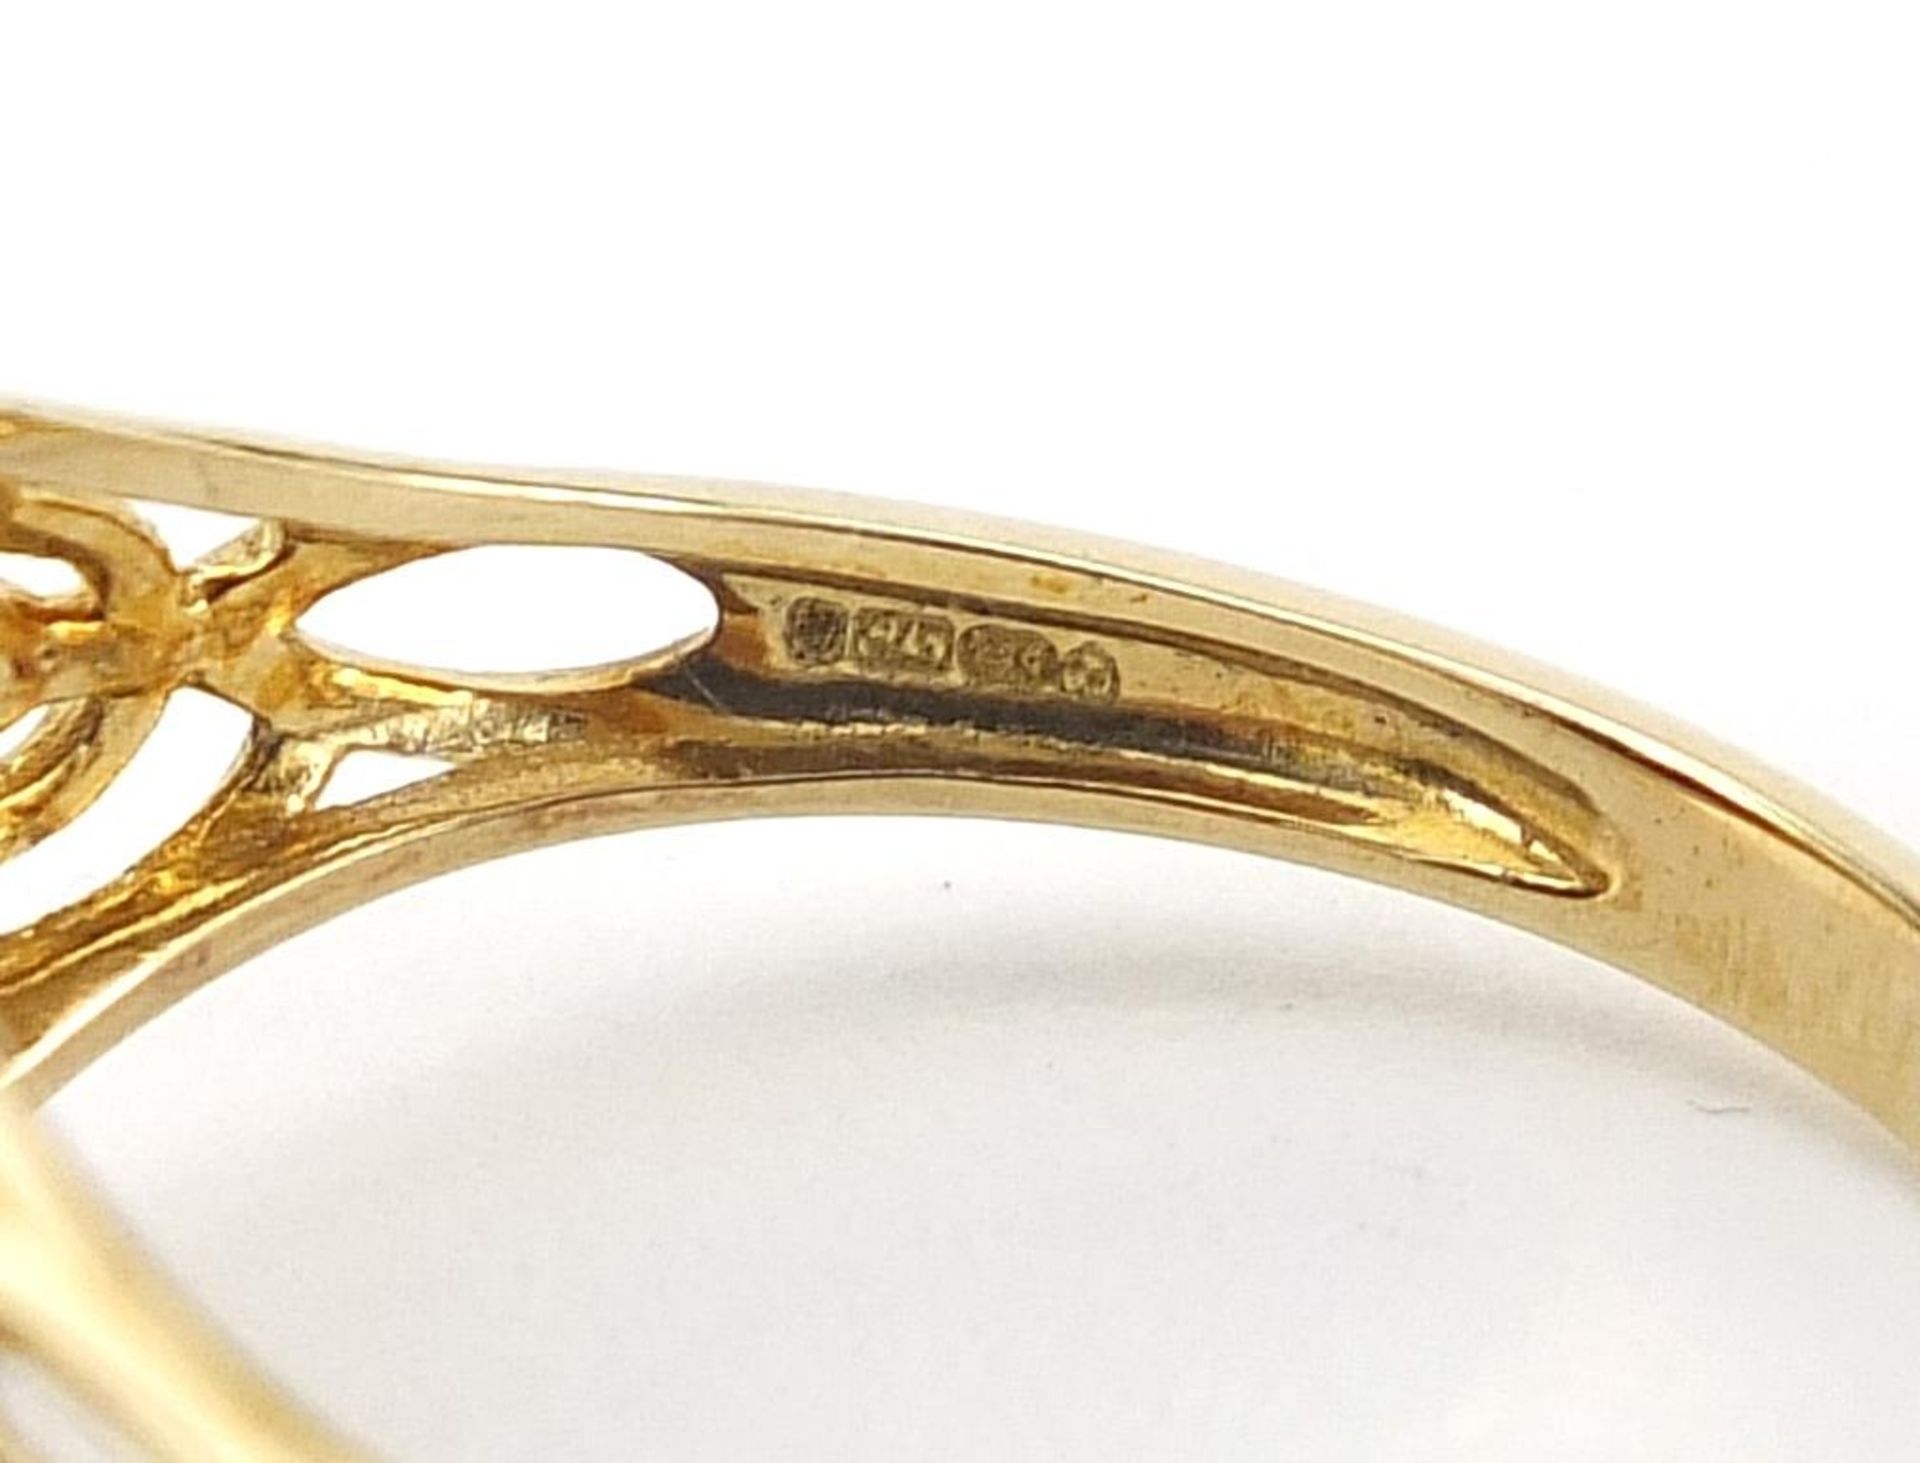 9ct gold and black onyx Jaguar car mascot ring, size V, 4.3g - Image 5 of 5